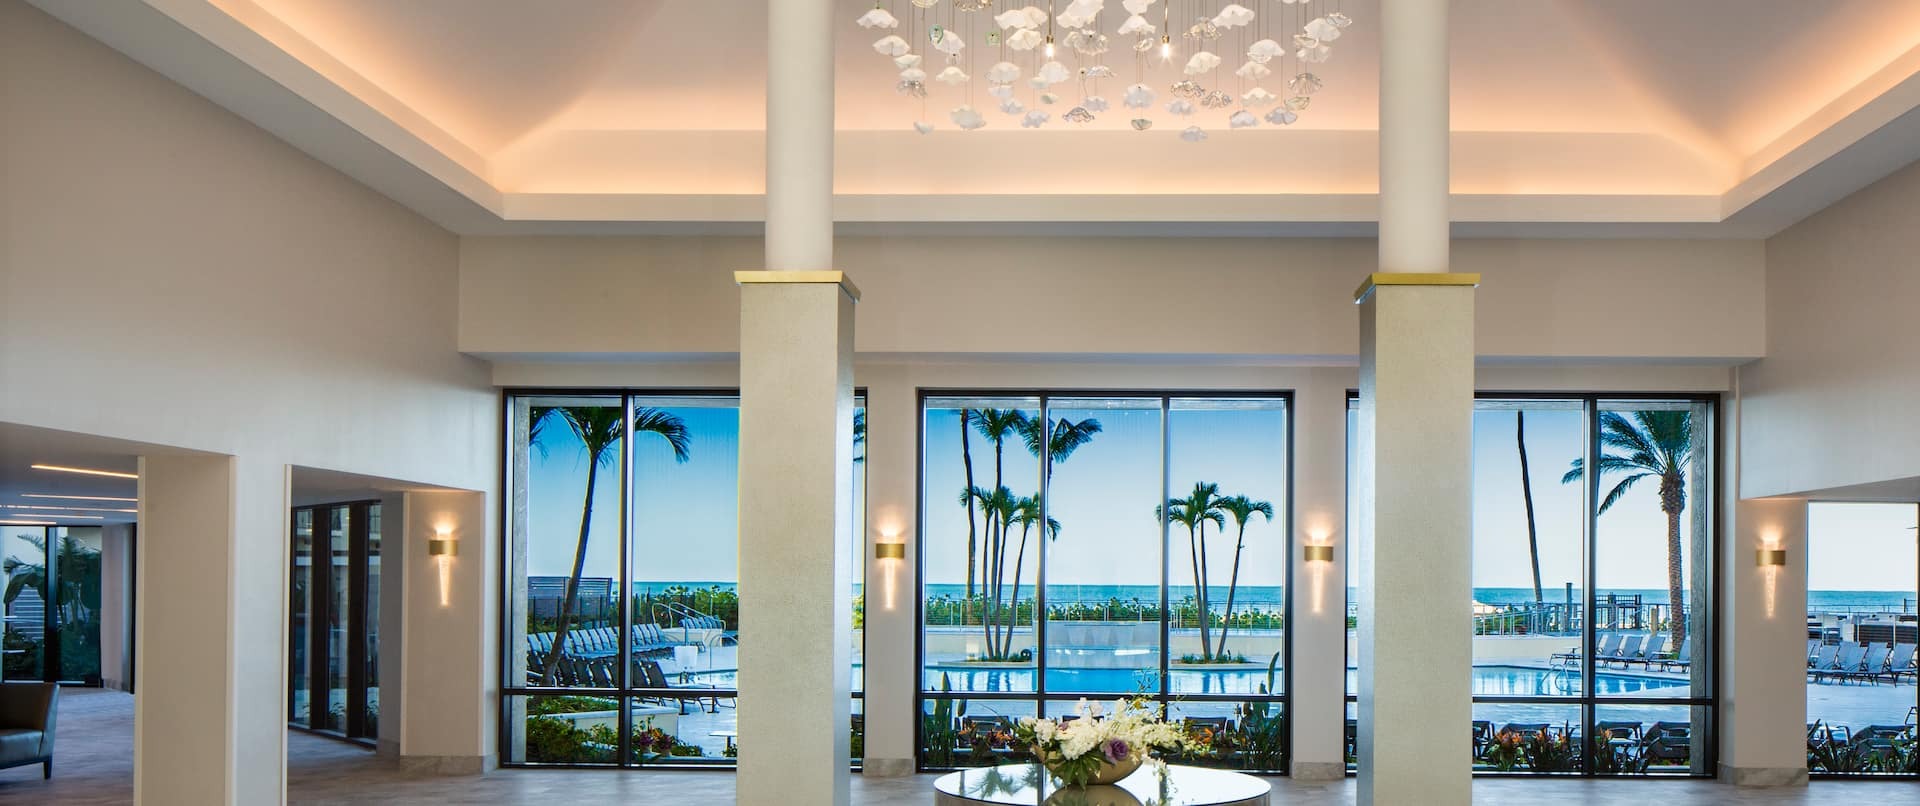 Photo of Hilton Marco Island Beach Resort and Spa, Marco Island, FL